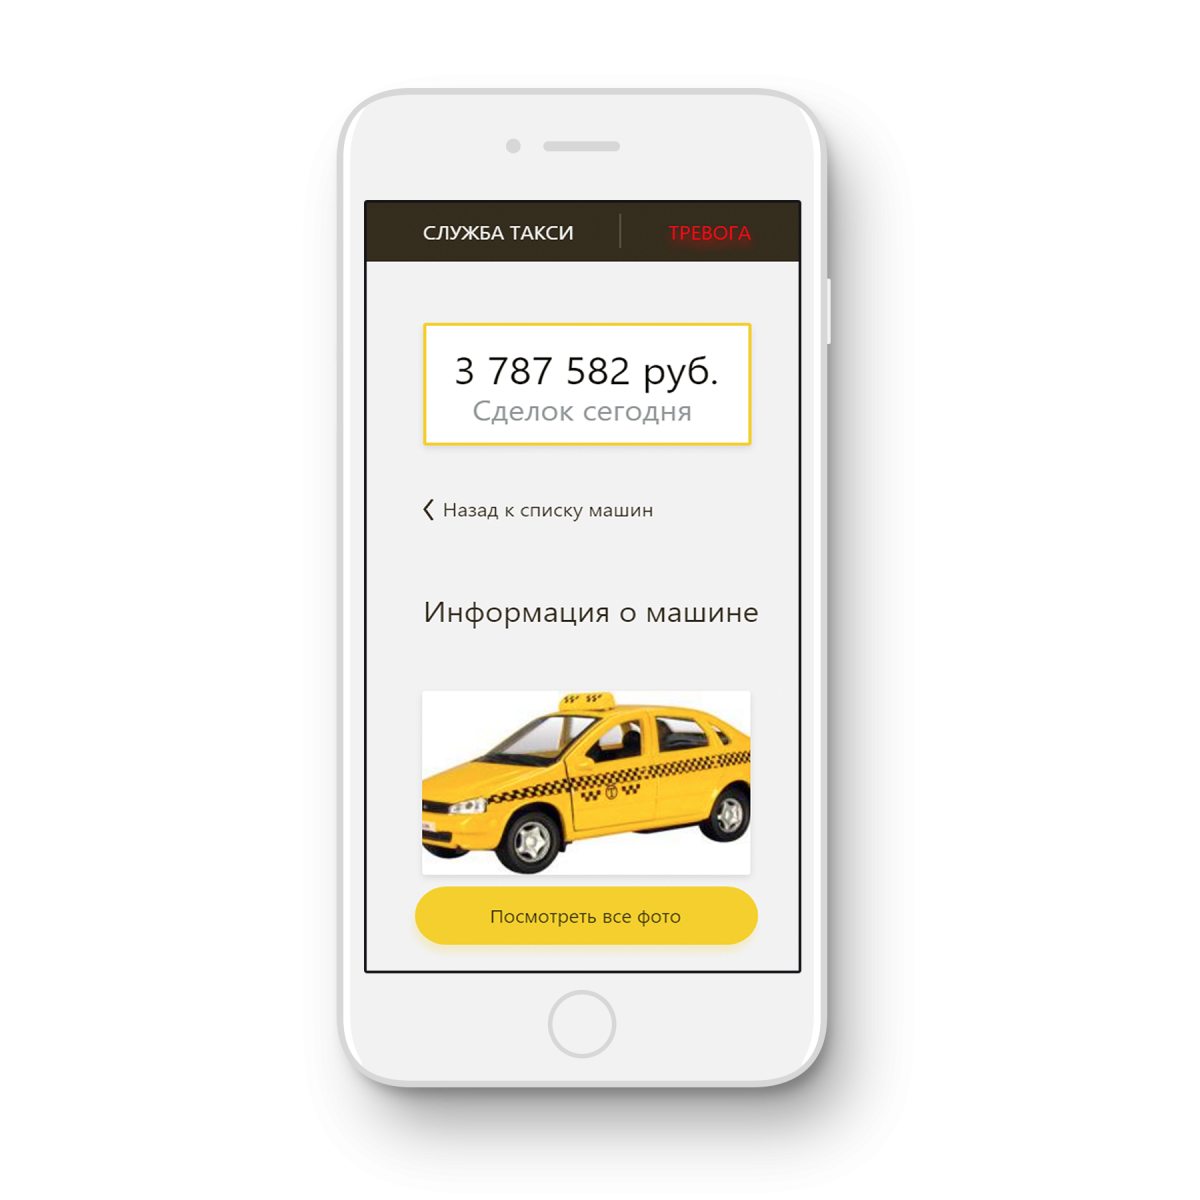 Приложение такси. Реклама приложения такси. Мобильное приложение такси.